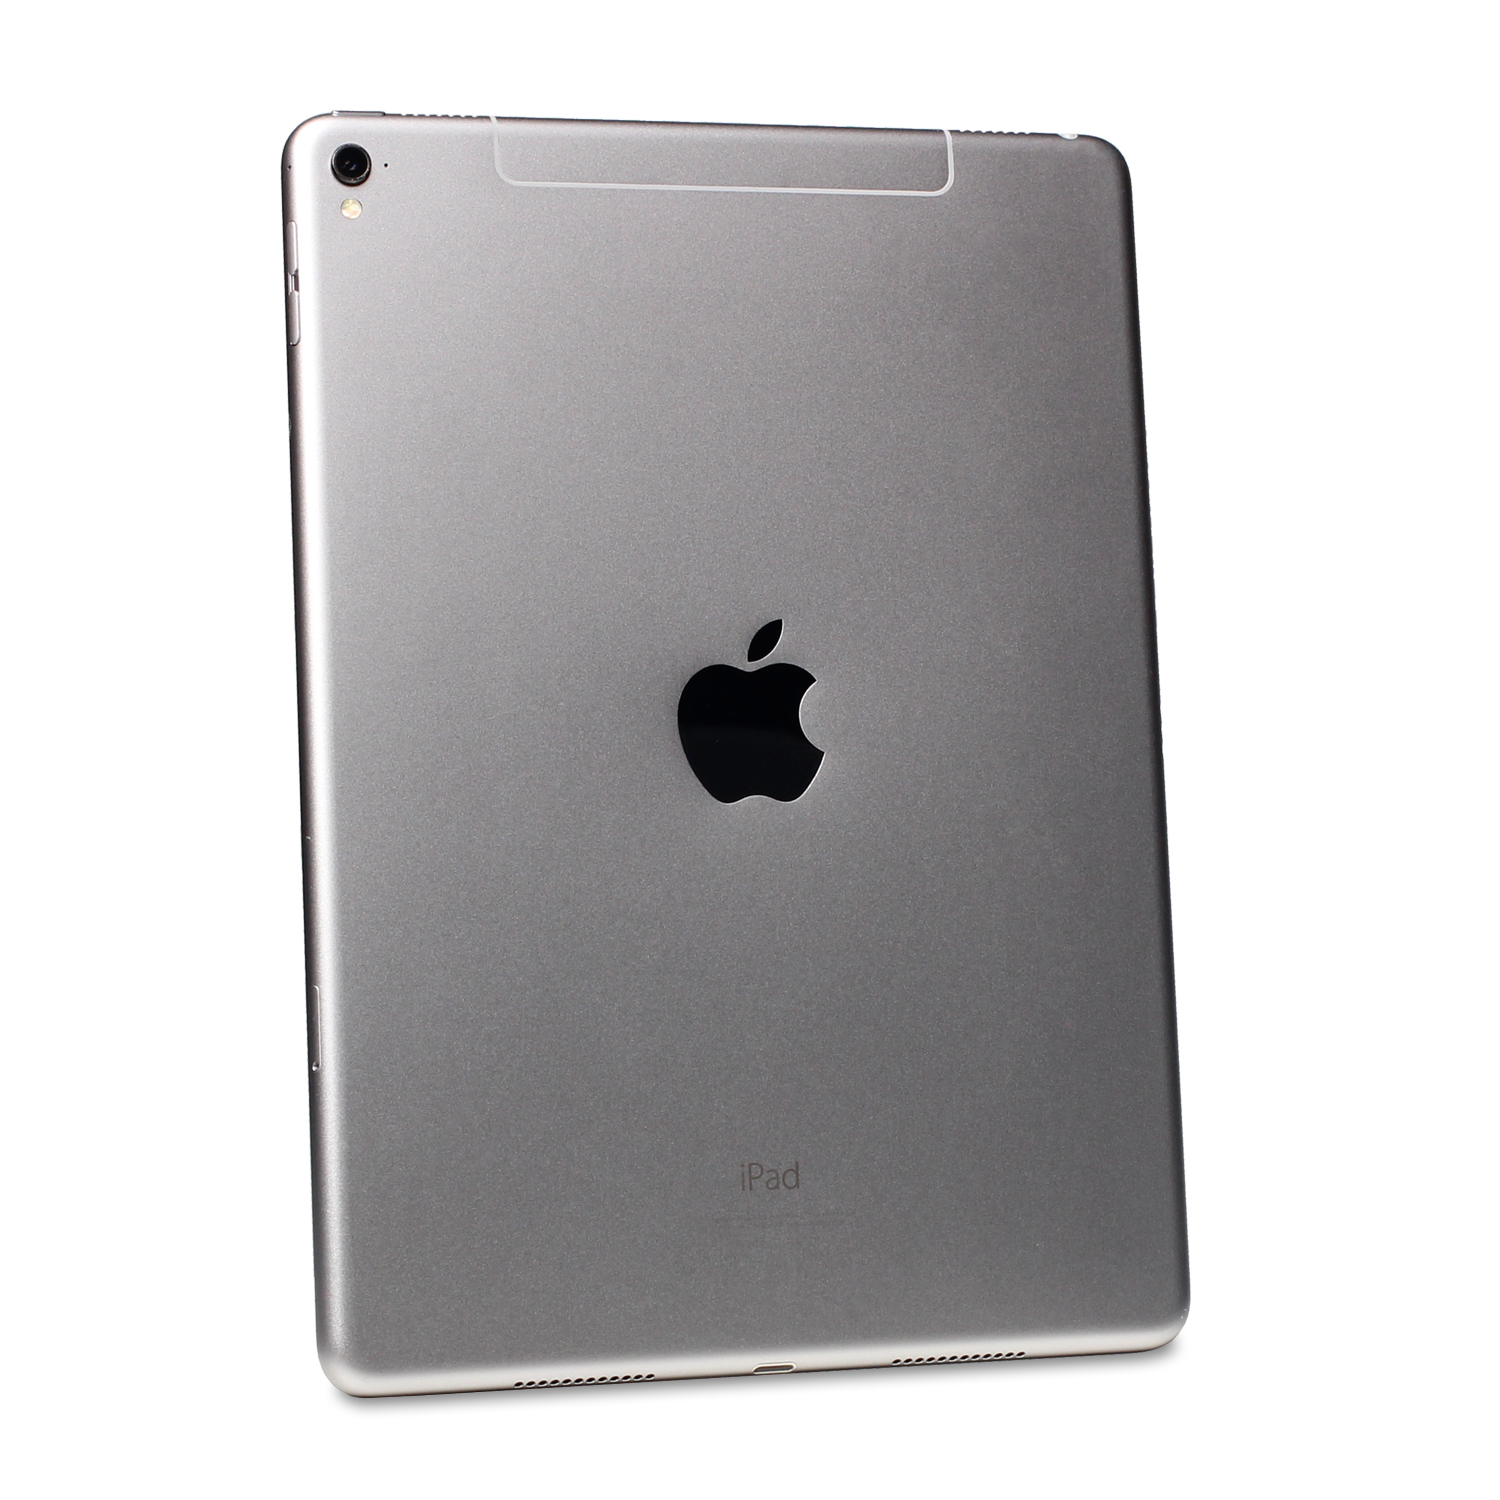 Apple, Inc. - iPad Pro 9.7-inch Wi-Fi+Cellular 128GB Space Gray